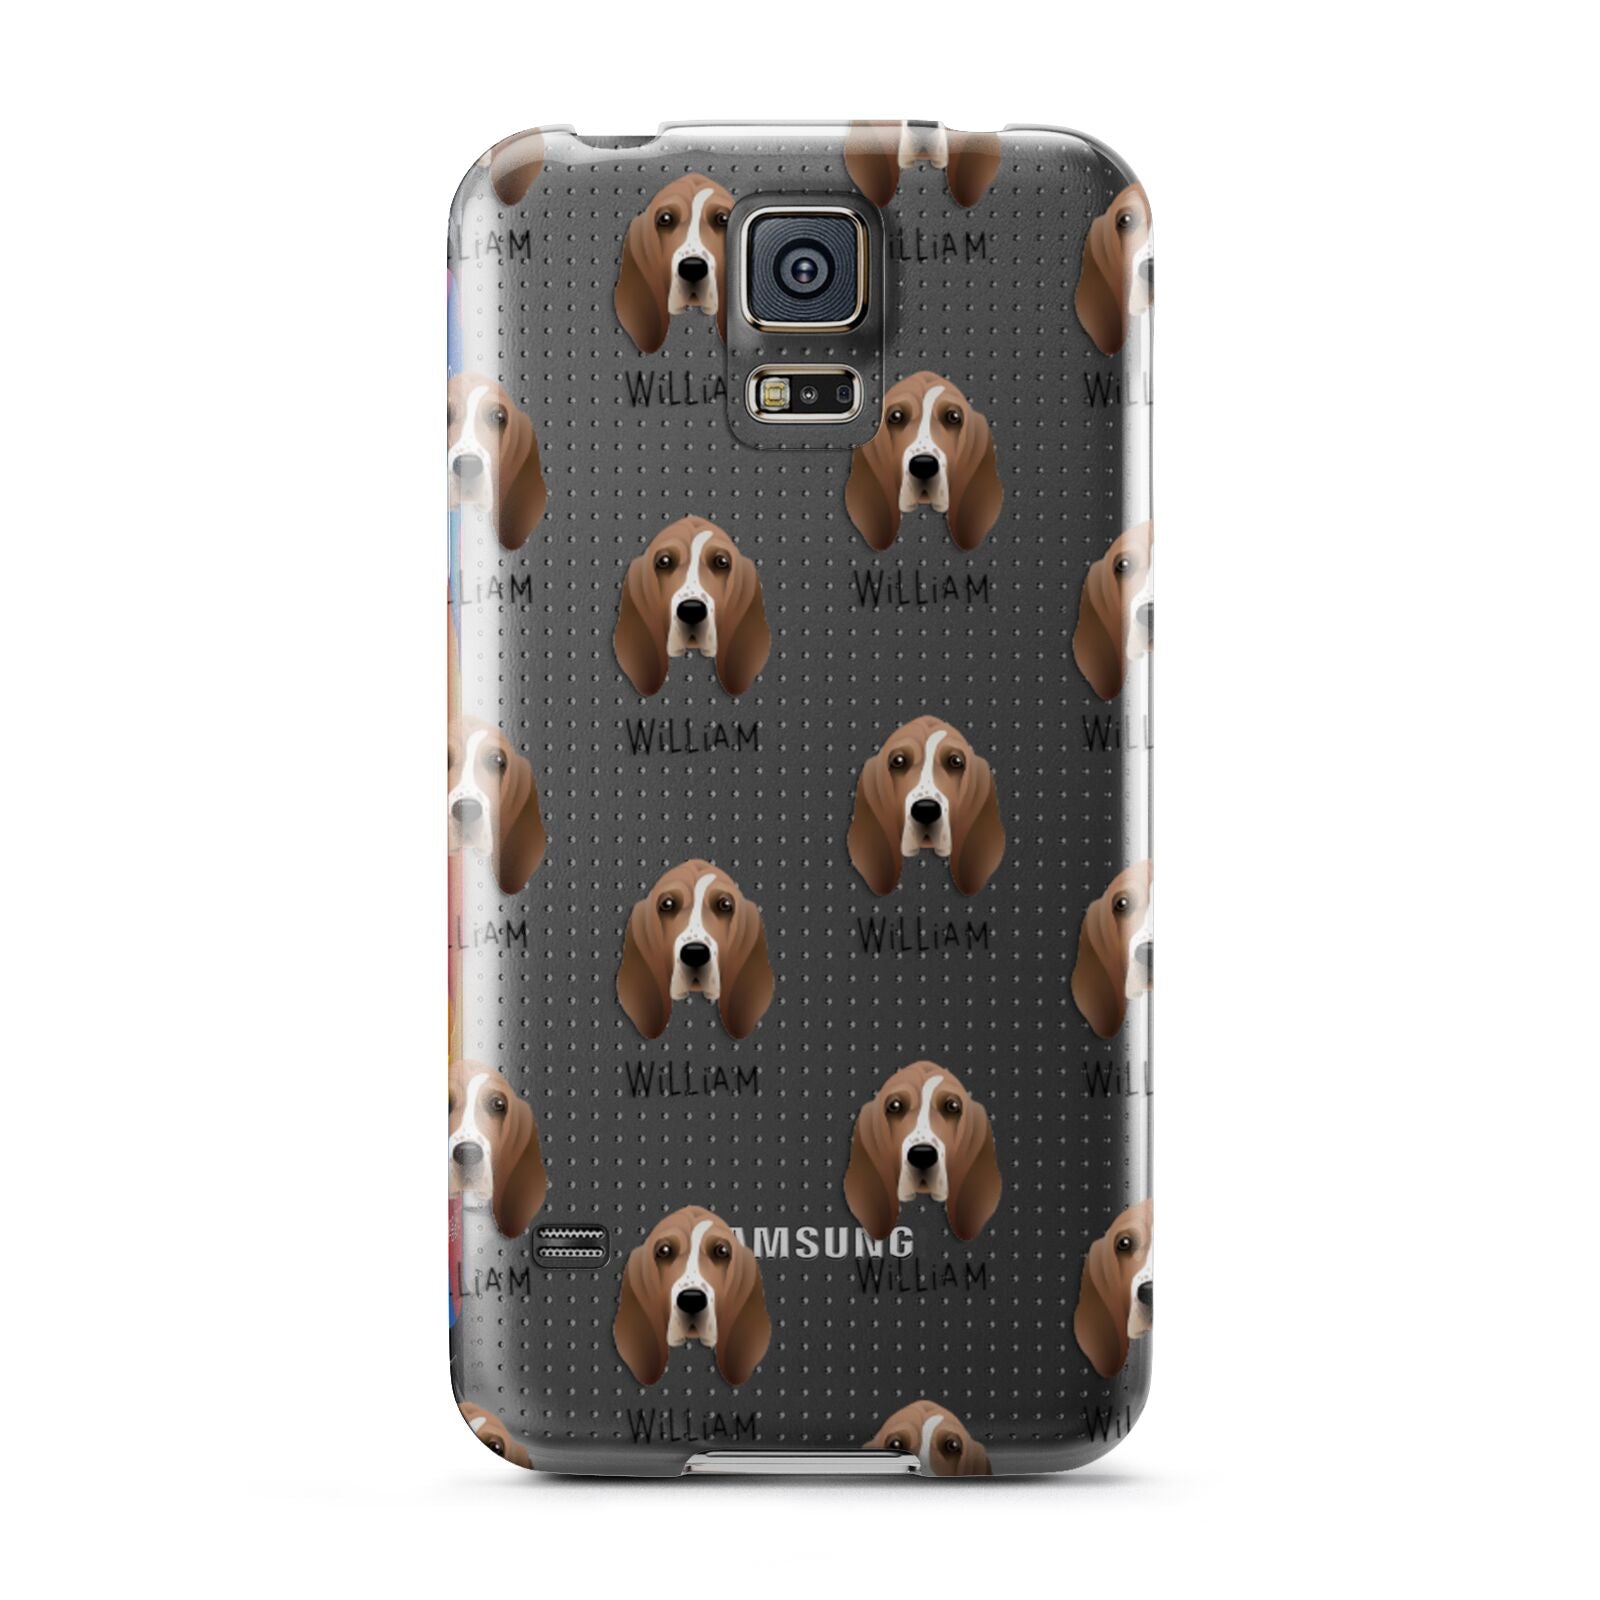 Basset Hound Icon with Name Samsung Galaxy S5 Case